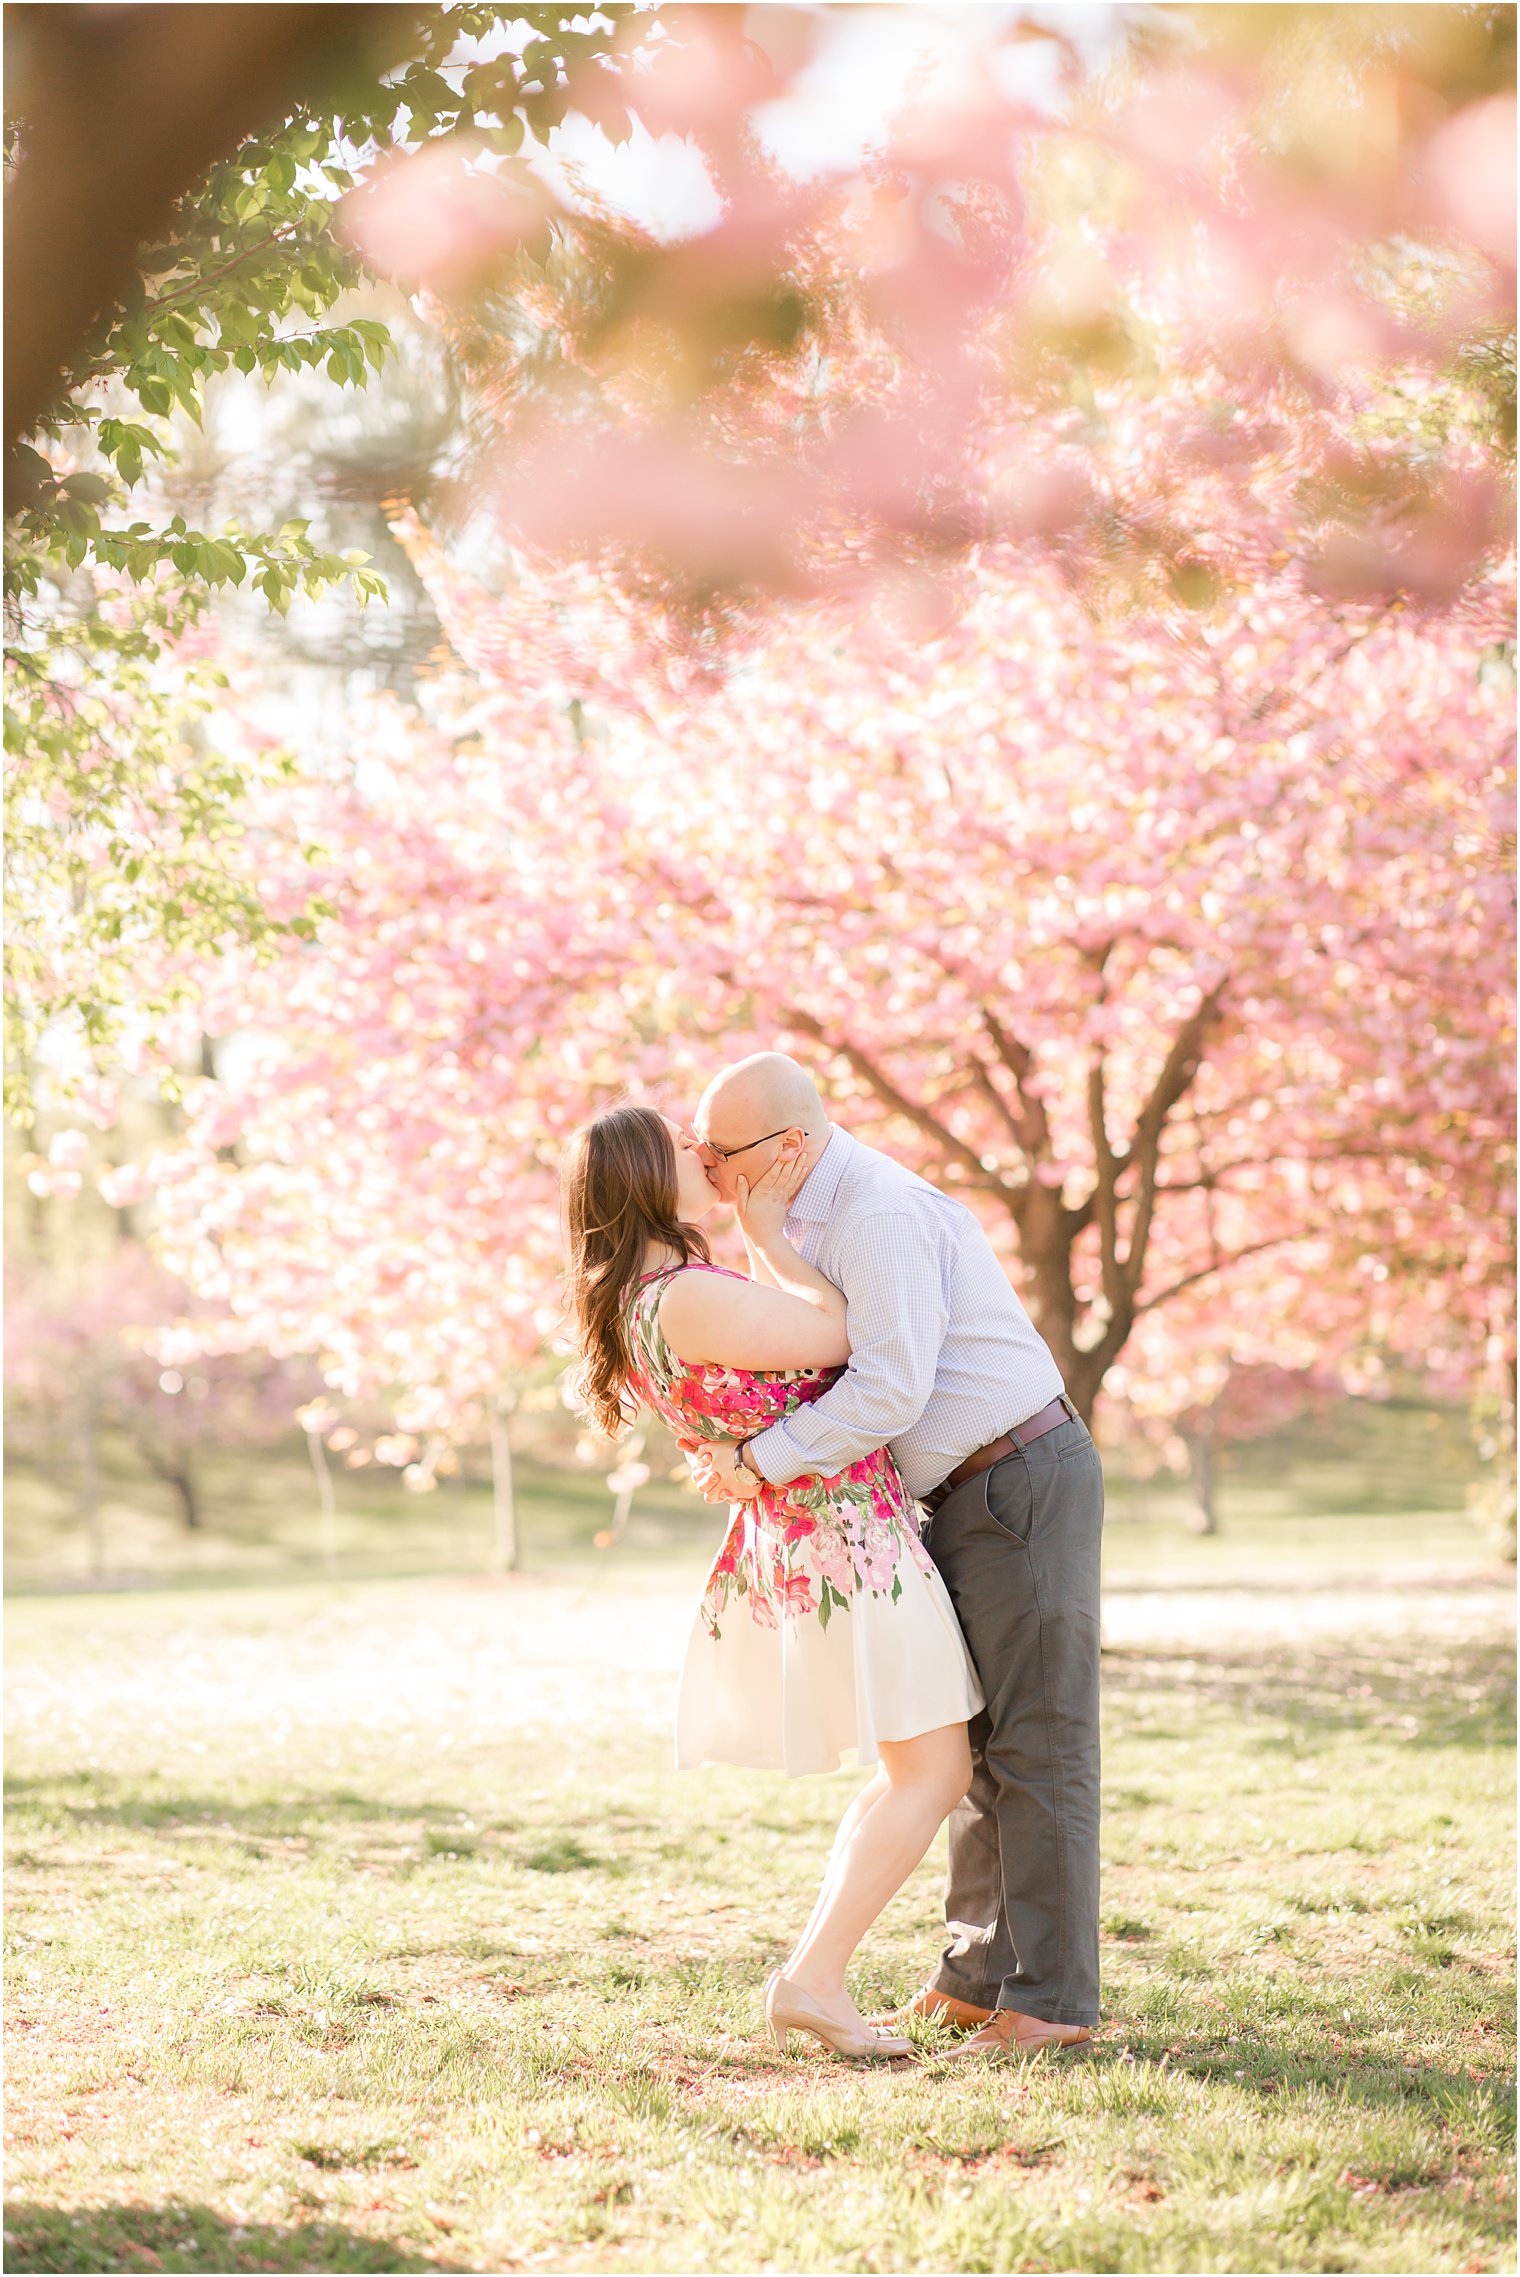 Groom kissing bride under a cherry blossom tree